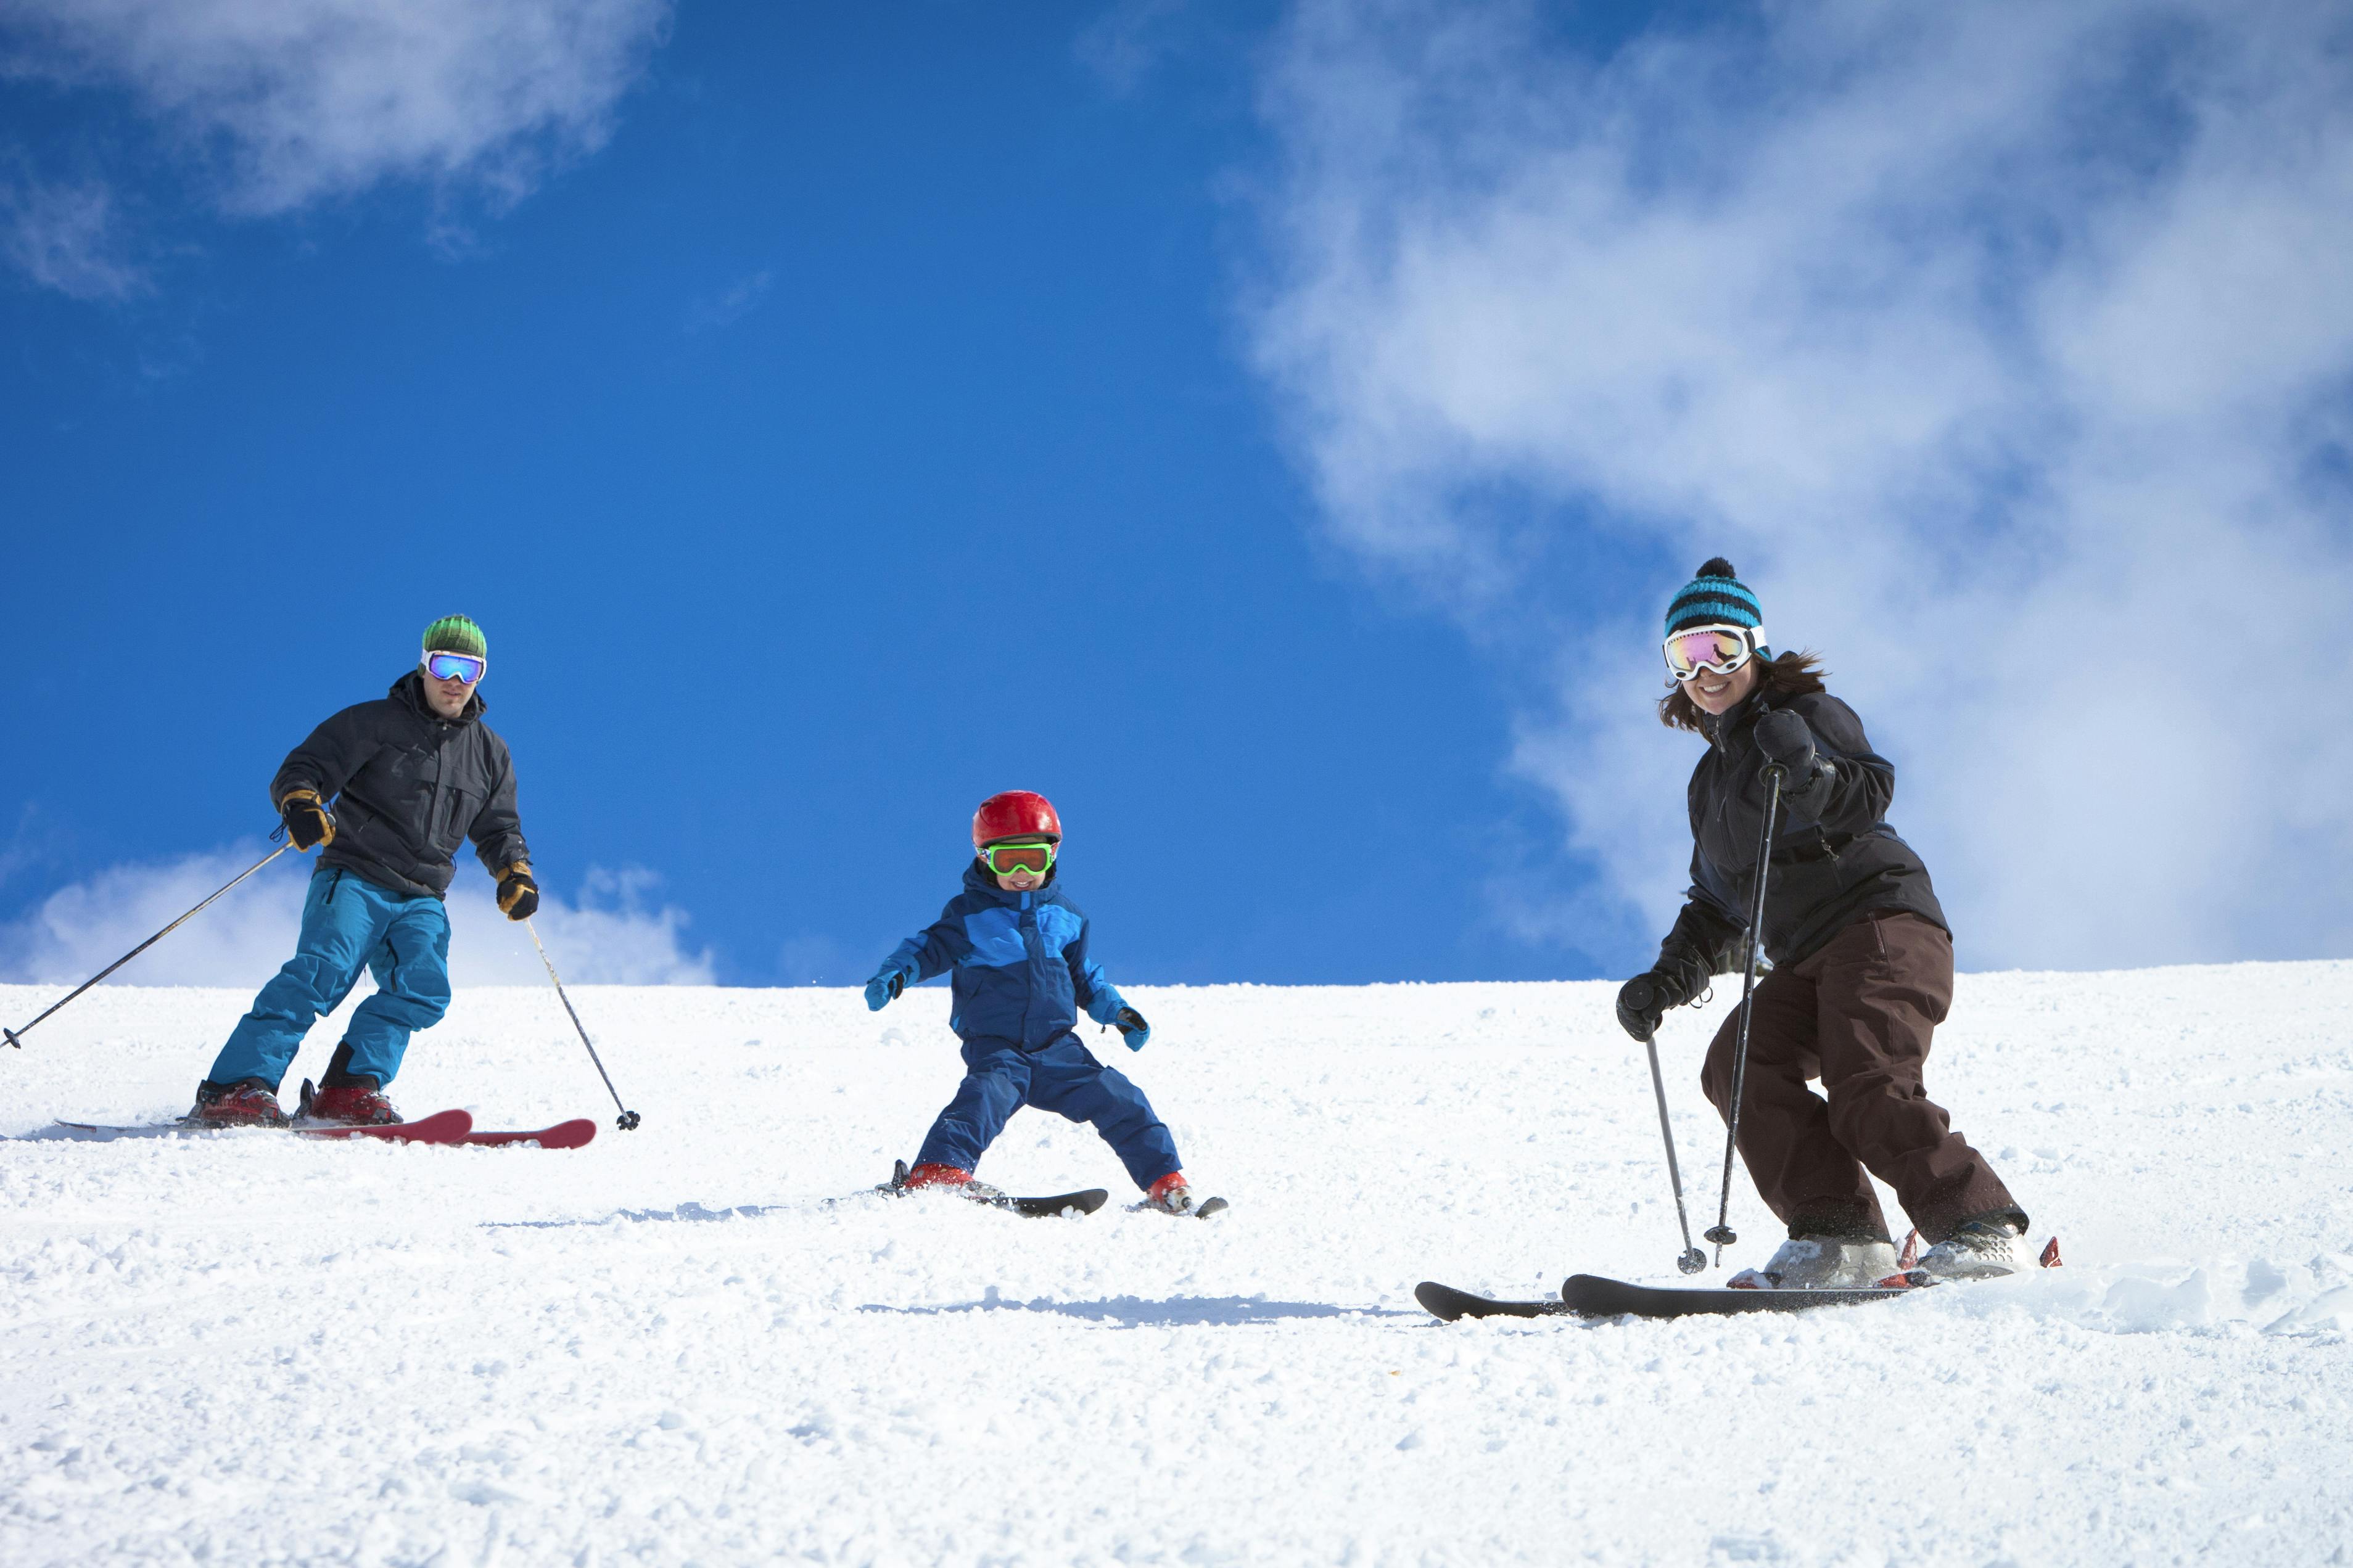 Salen family skiing